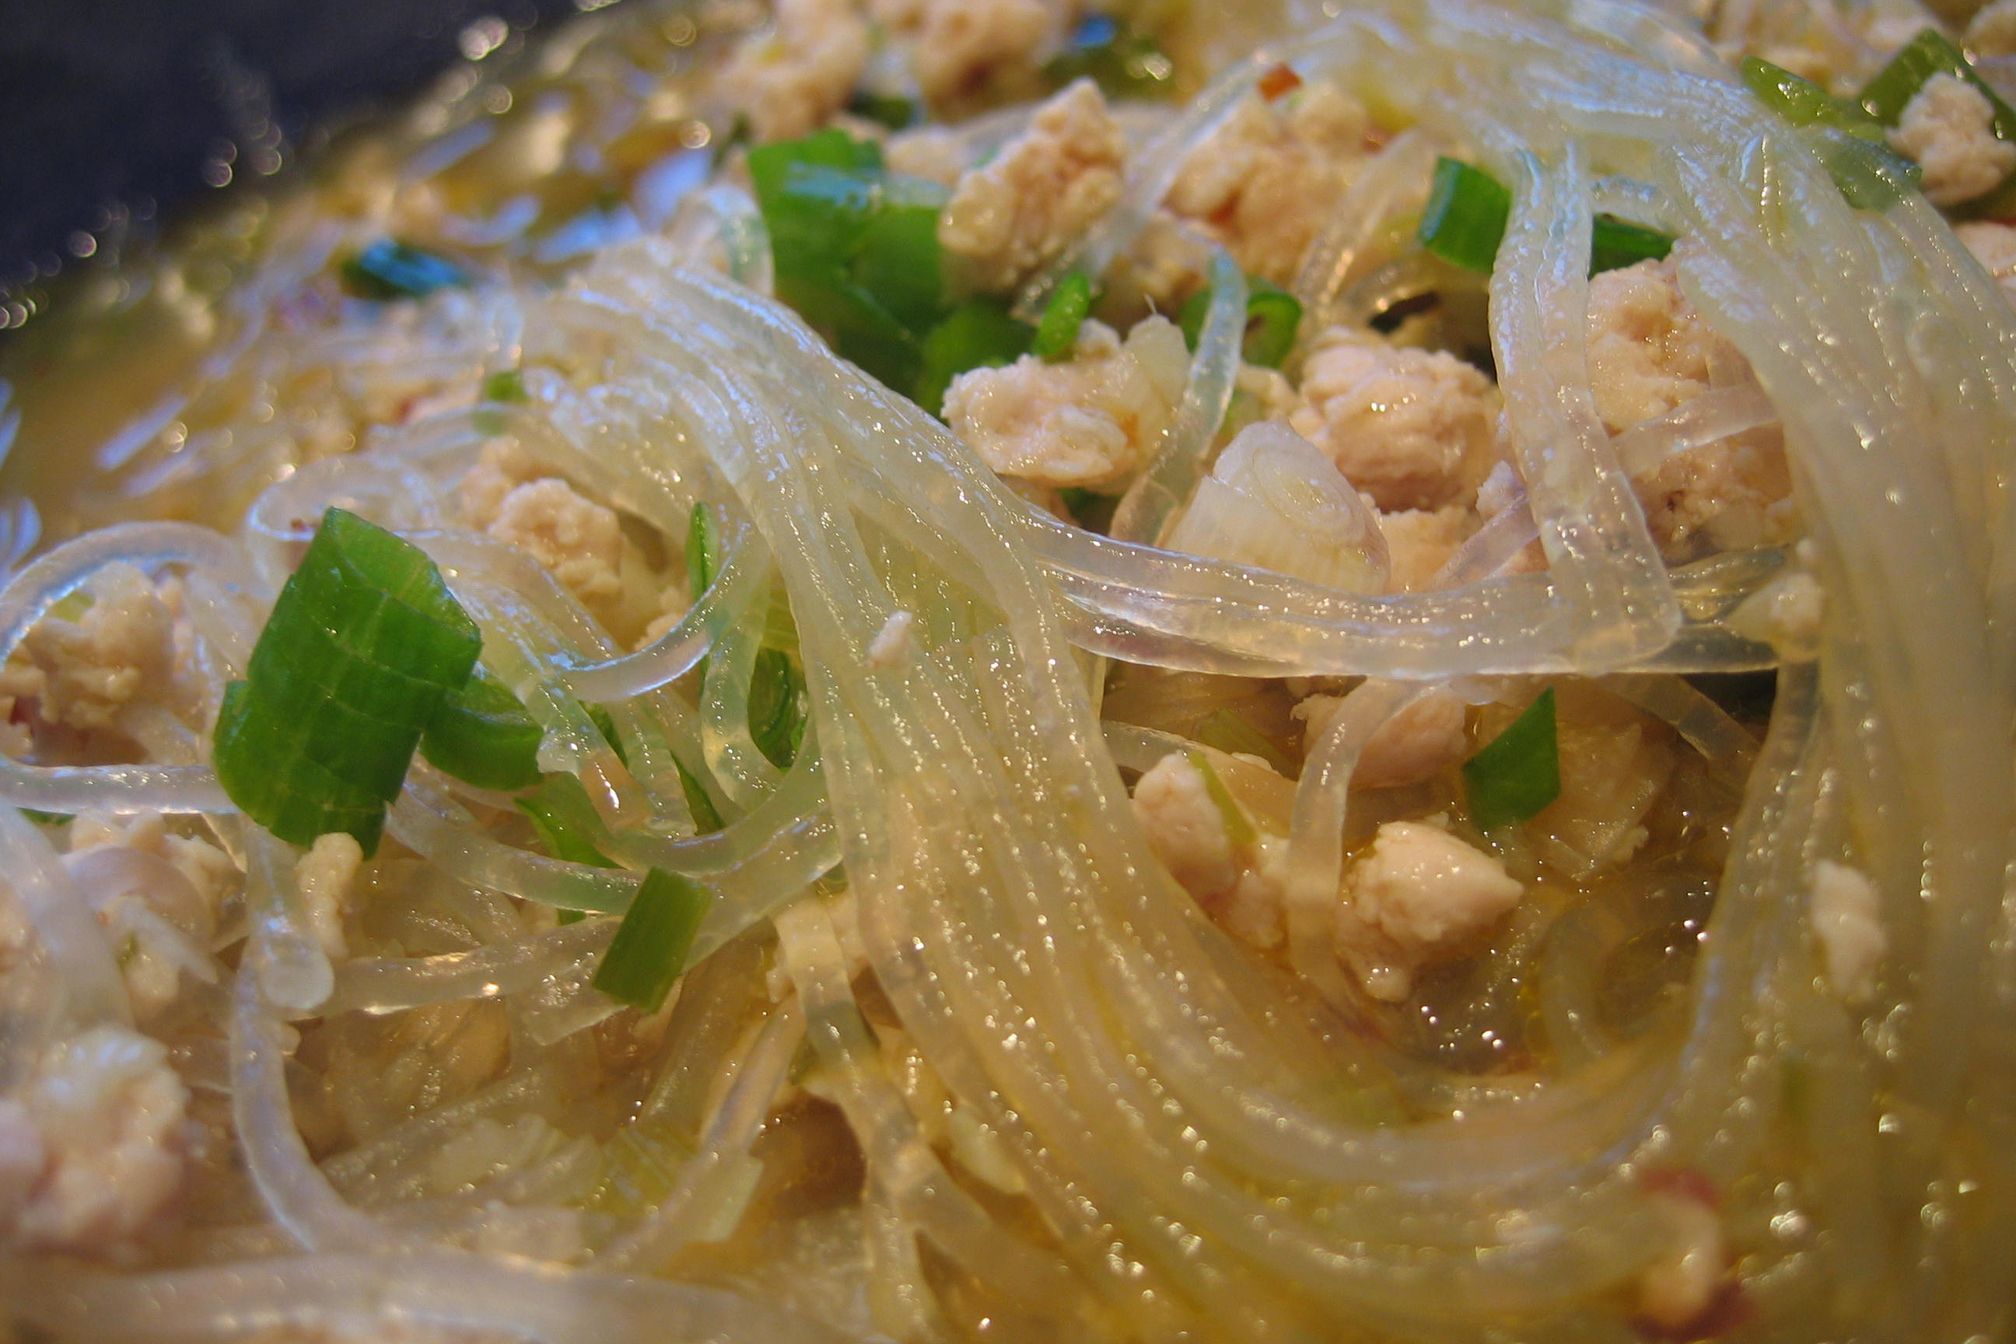 Garlic Green Onion Glass Noodle Soup Recipe On Food52,White Sweet Potato Vs Orange Sweet Potato